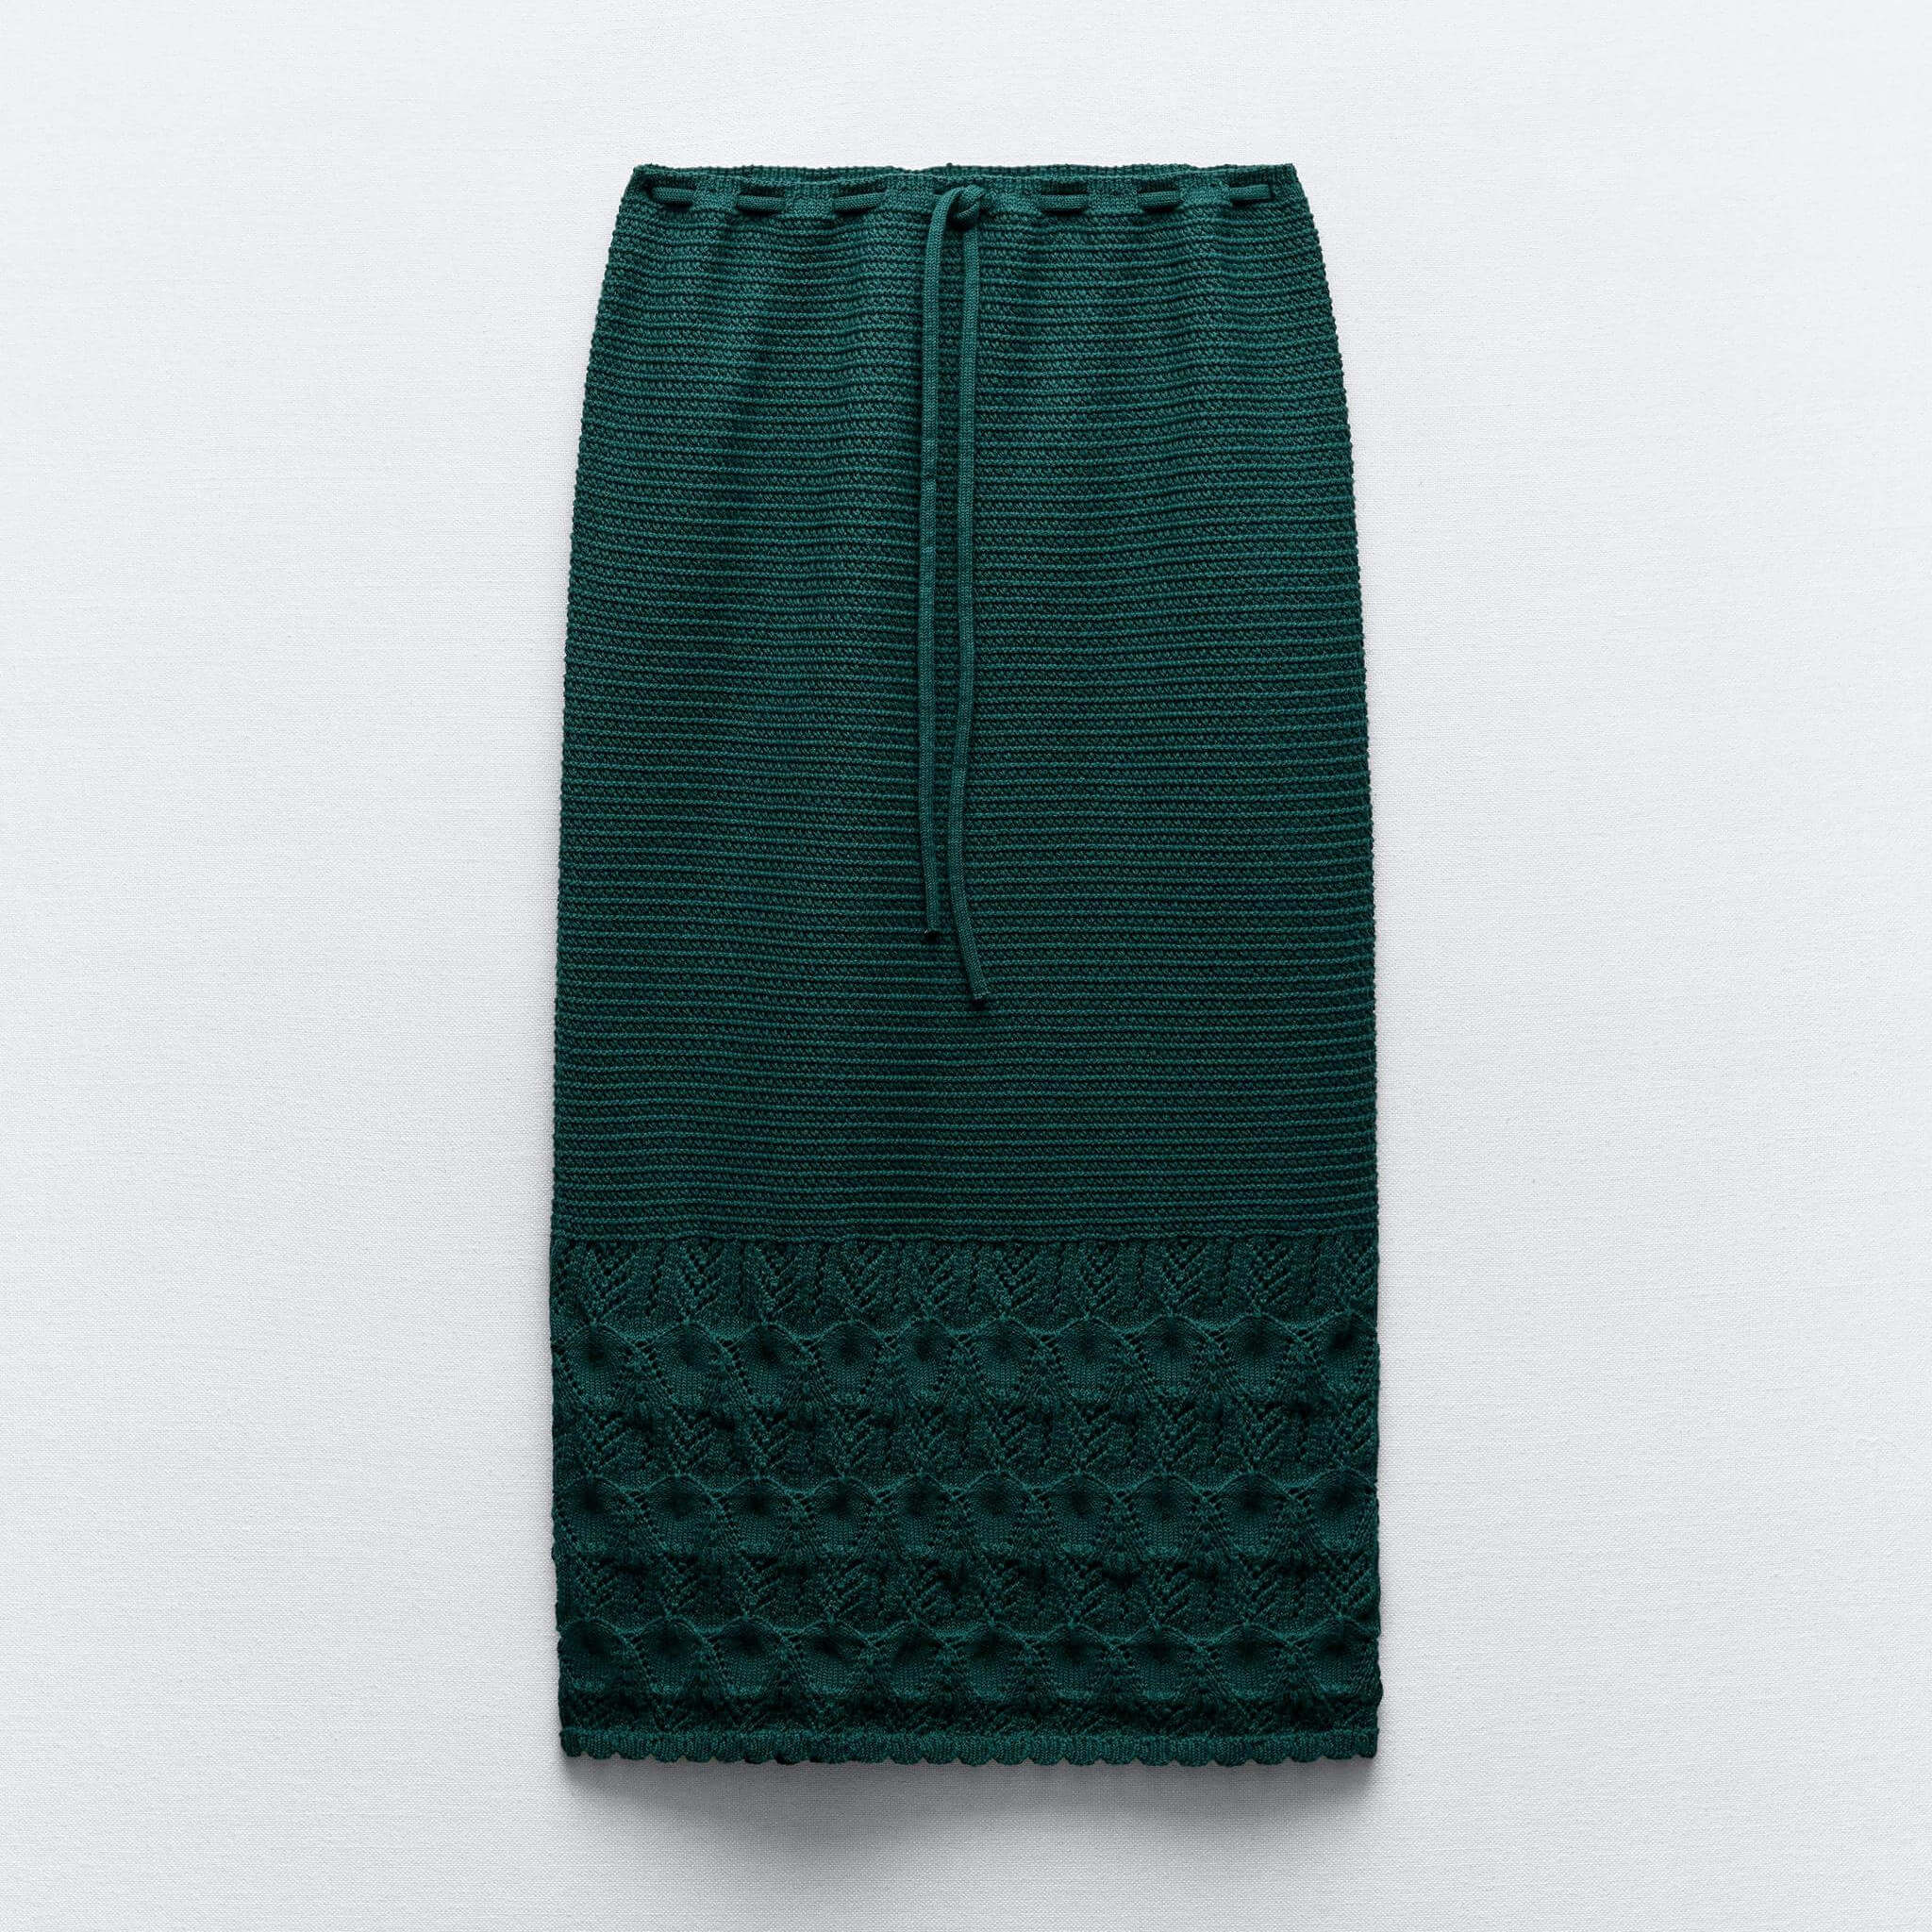 Юбка-миди Zara Pointelle Knit, зеленый юбка ажурной вязки